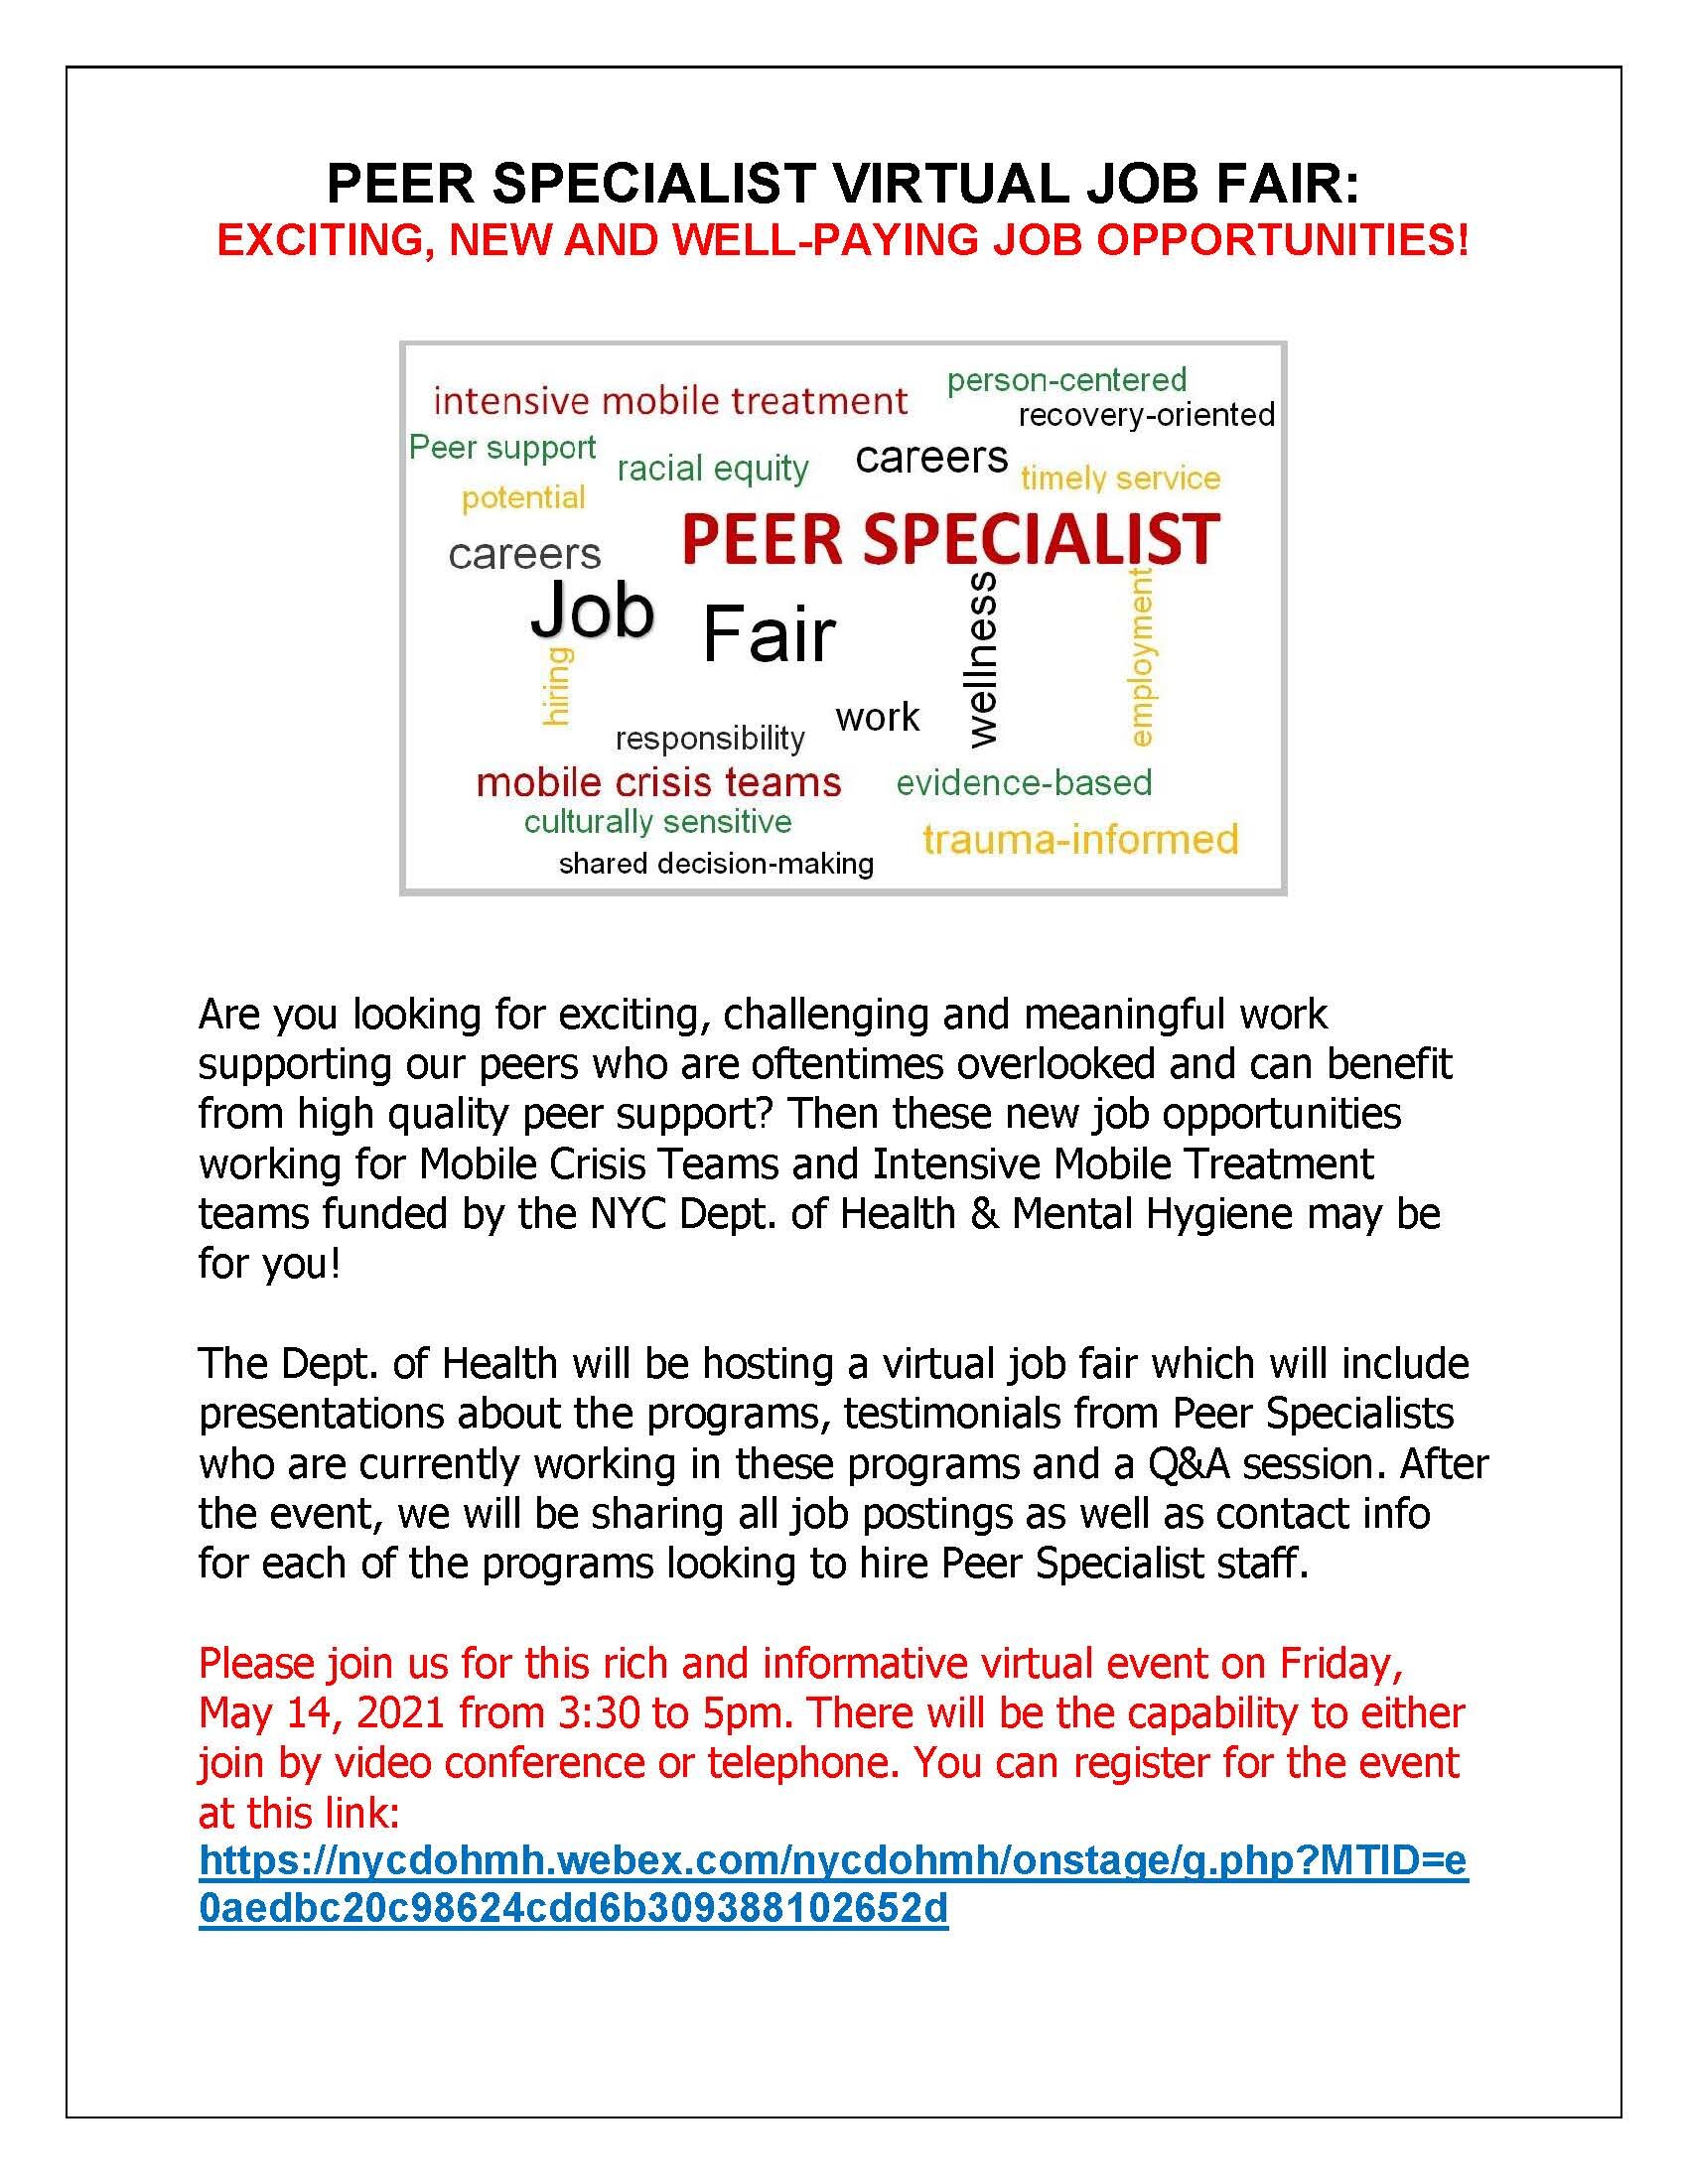 MCT.IMT Peer Spec job fair flier 4.27.21.jpg